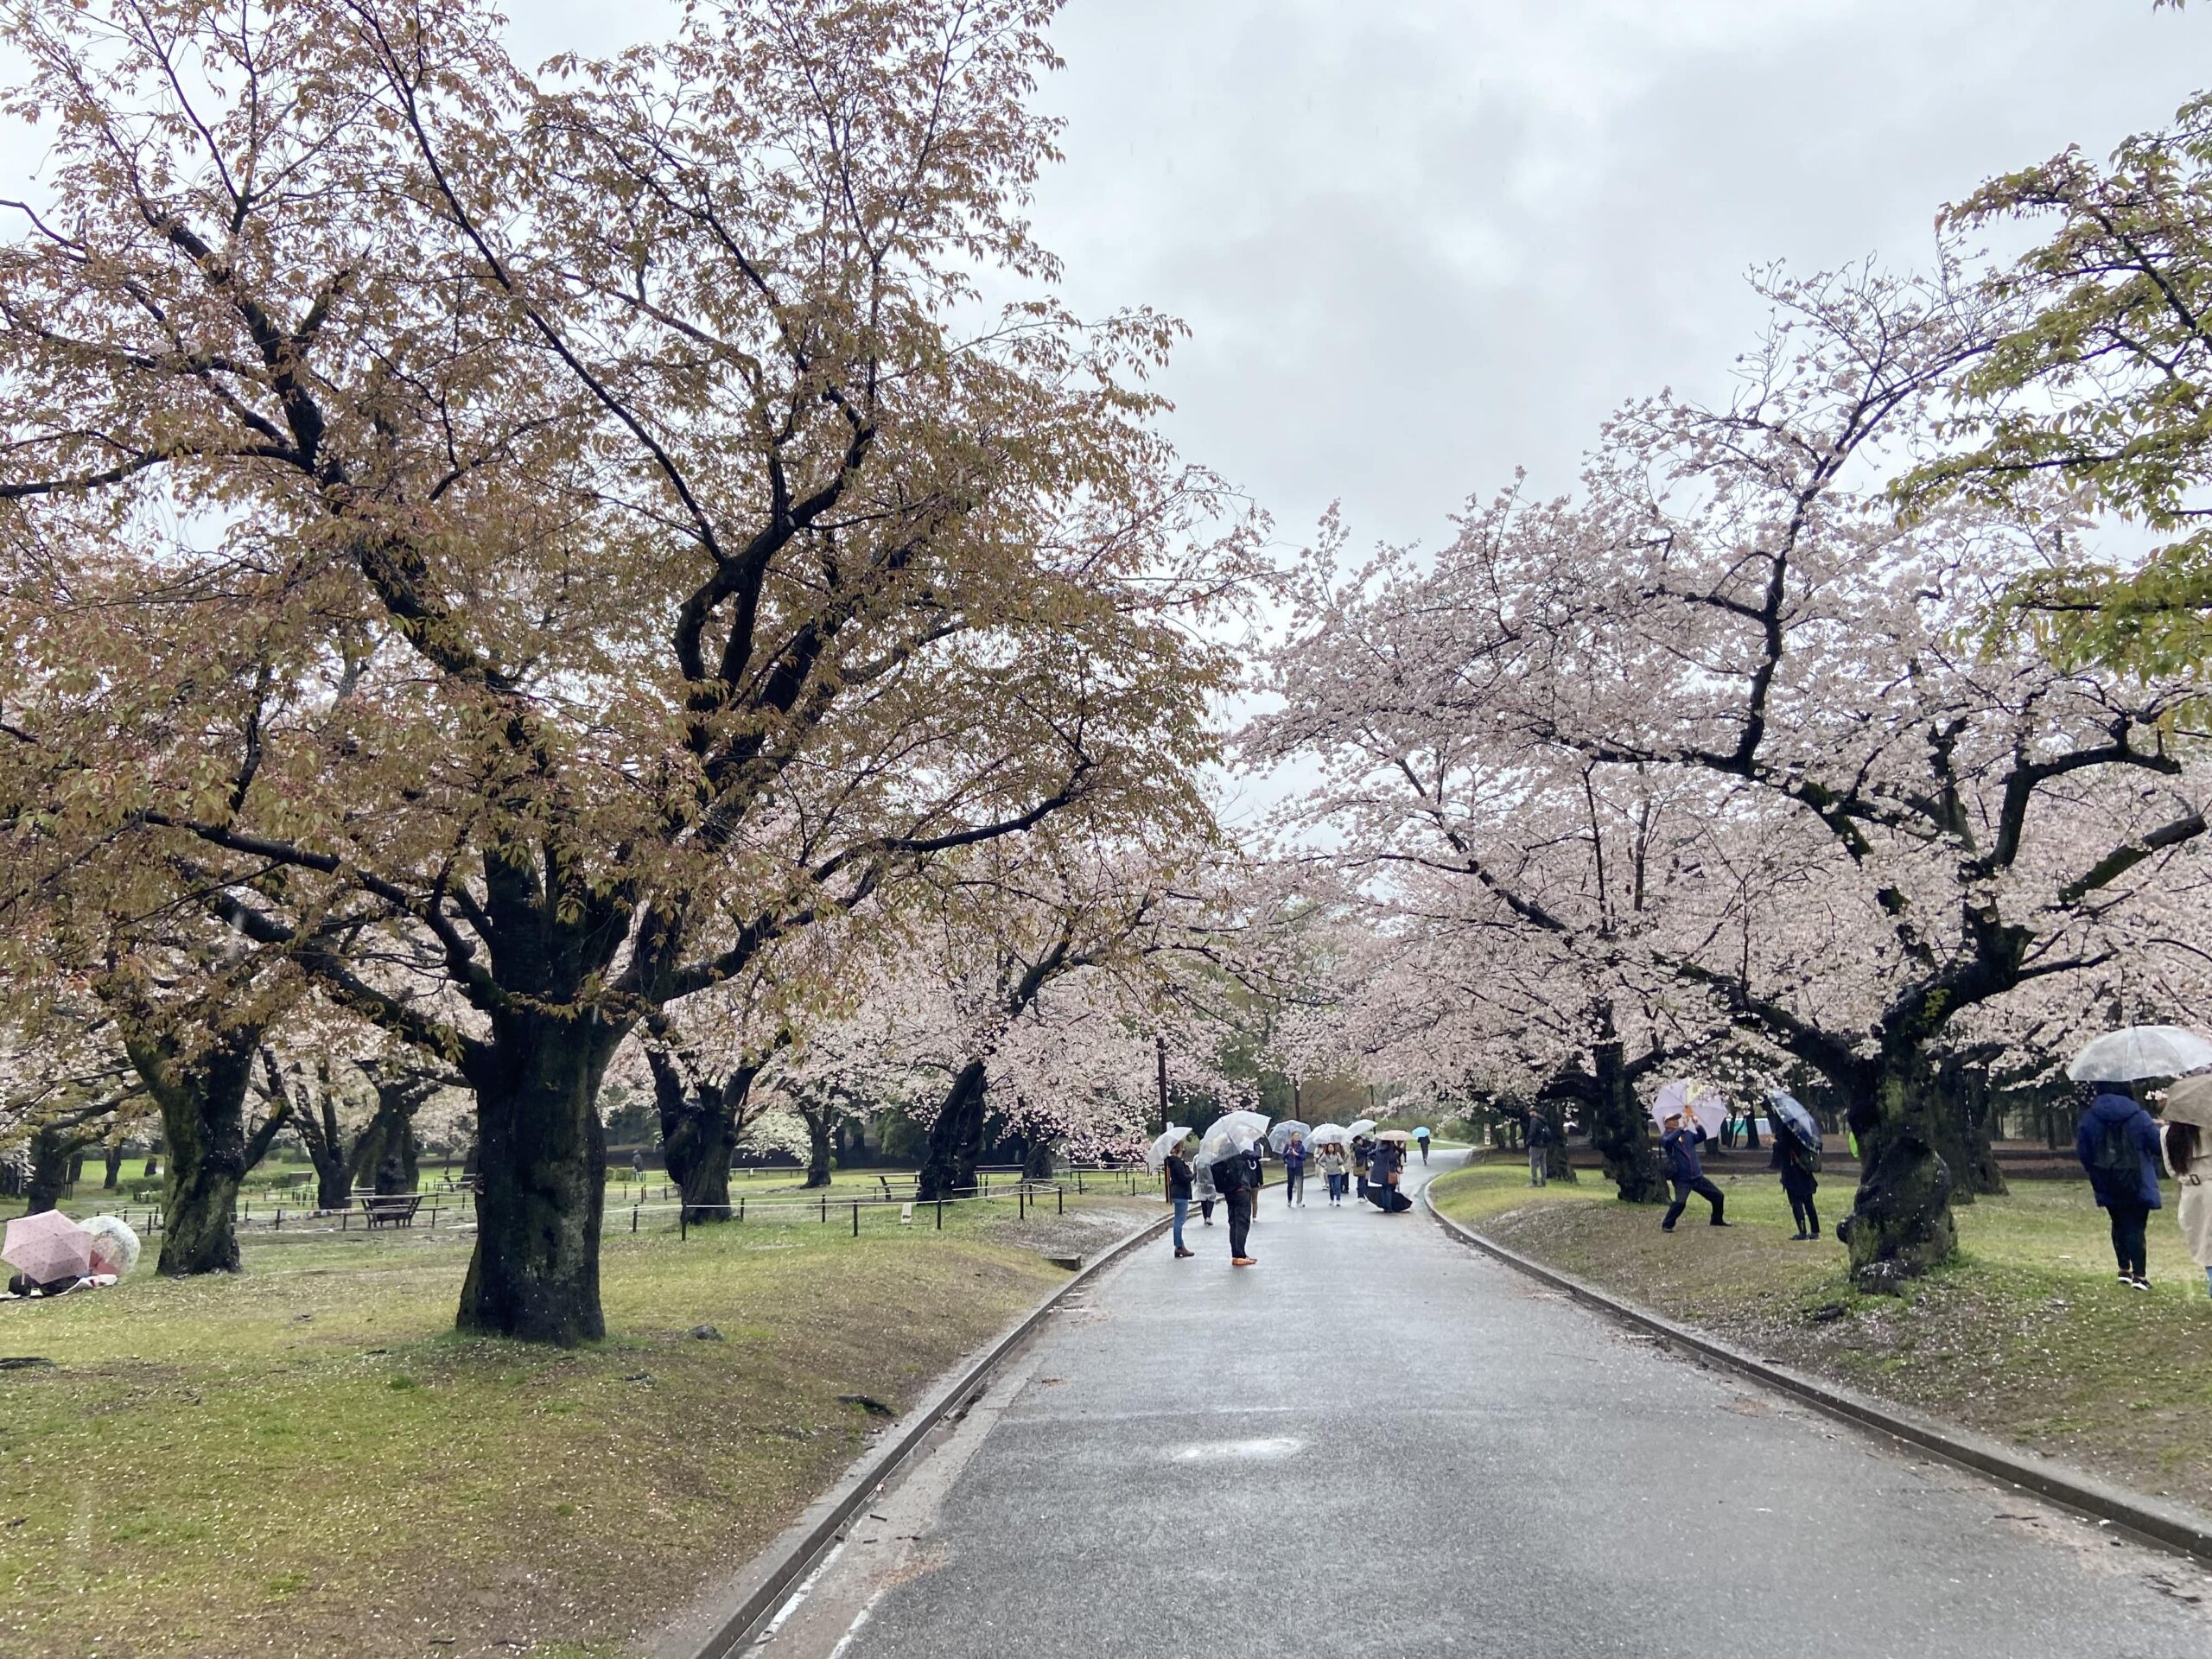 Shinjuku Gyoen National Garden tokyo hanami best cherry blossom photo spots in japan where to find cherry blossoms